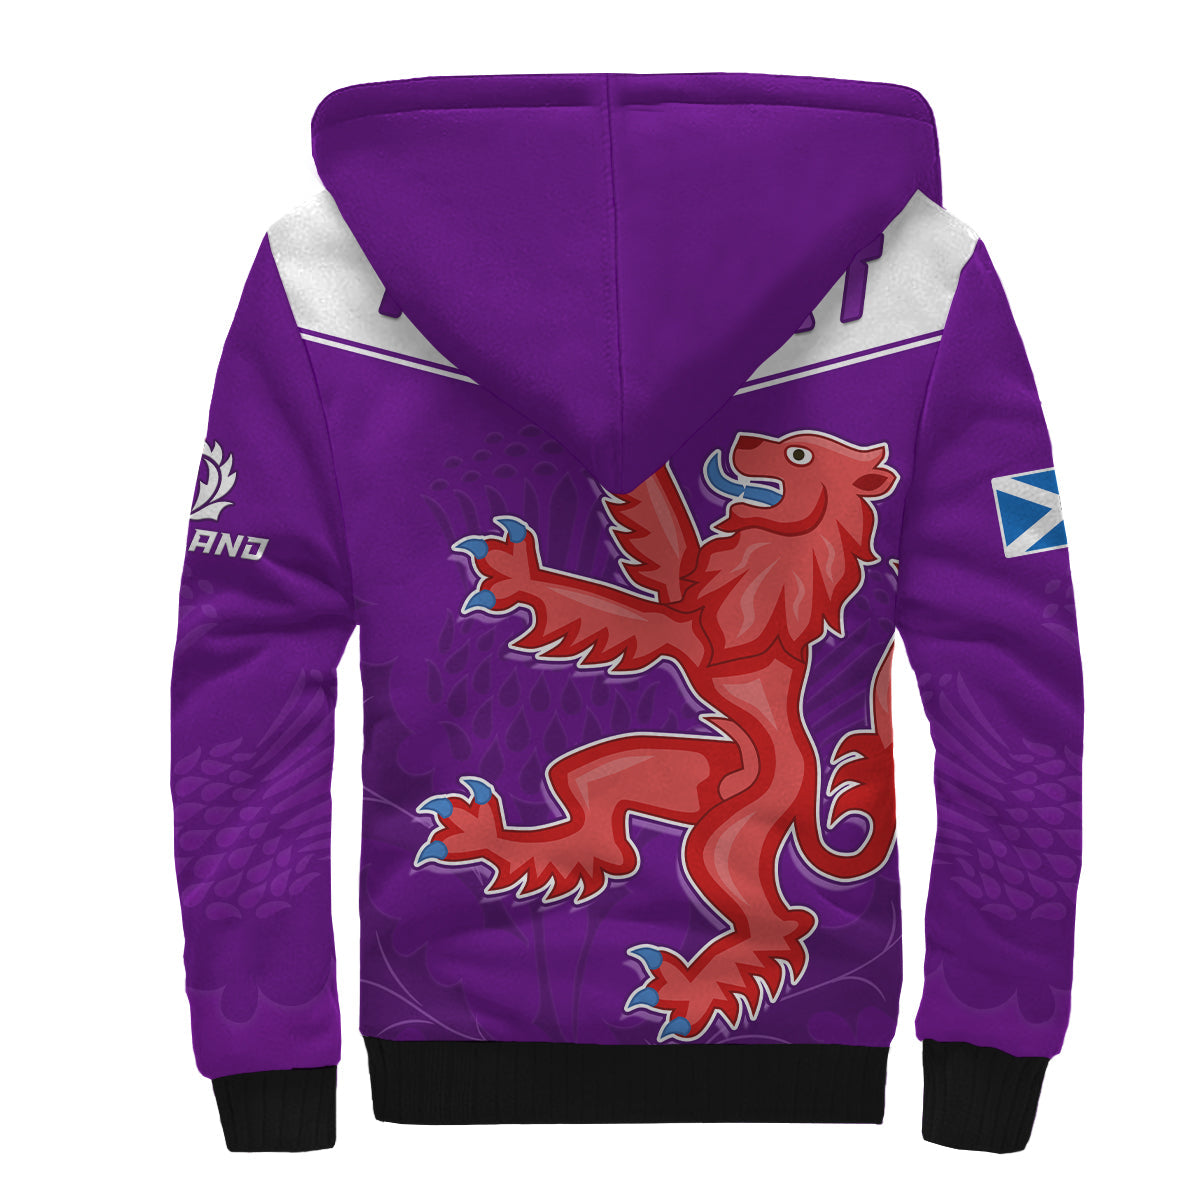 custom-personalised-scottish-rugby-sherpa-hoodie-map-of-scotland-thistle-purple-version-lt14